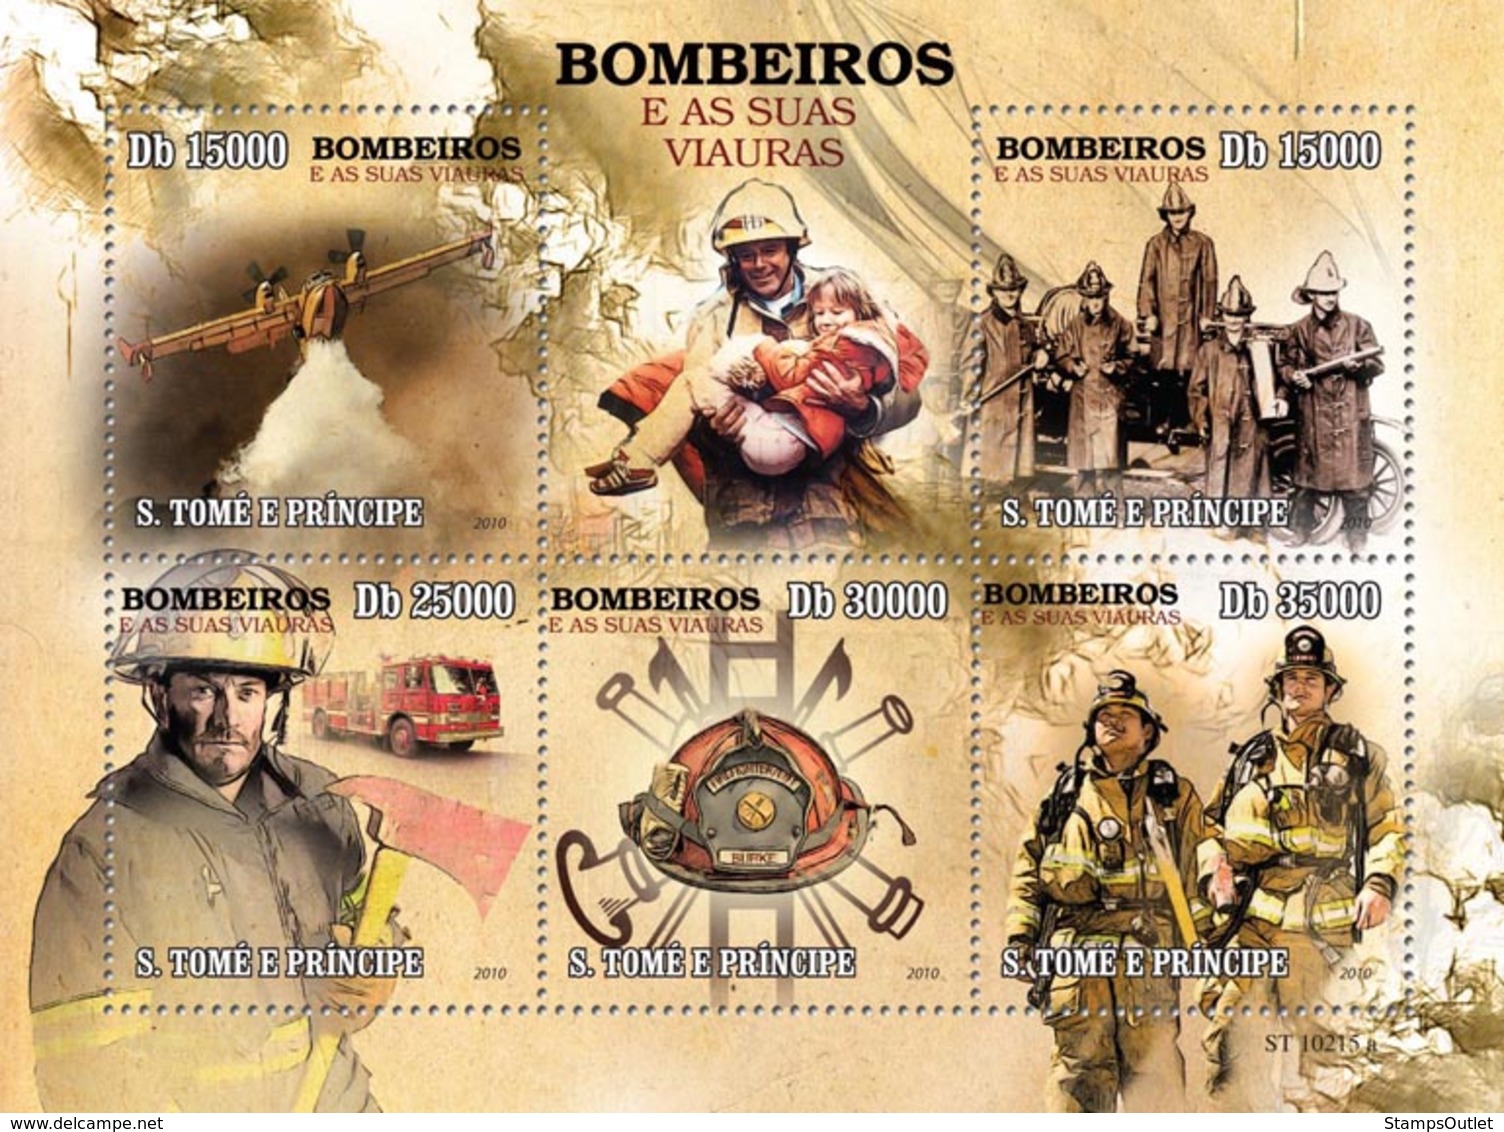 S. TOME & PRINCIPE 2010 - Firefighters 5v - YT 3516-3520, Mi 4430-4434 - Sao Tome And Principe